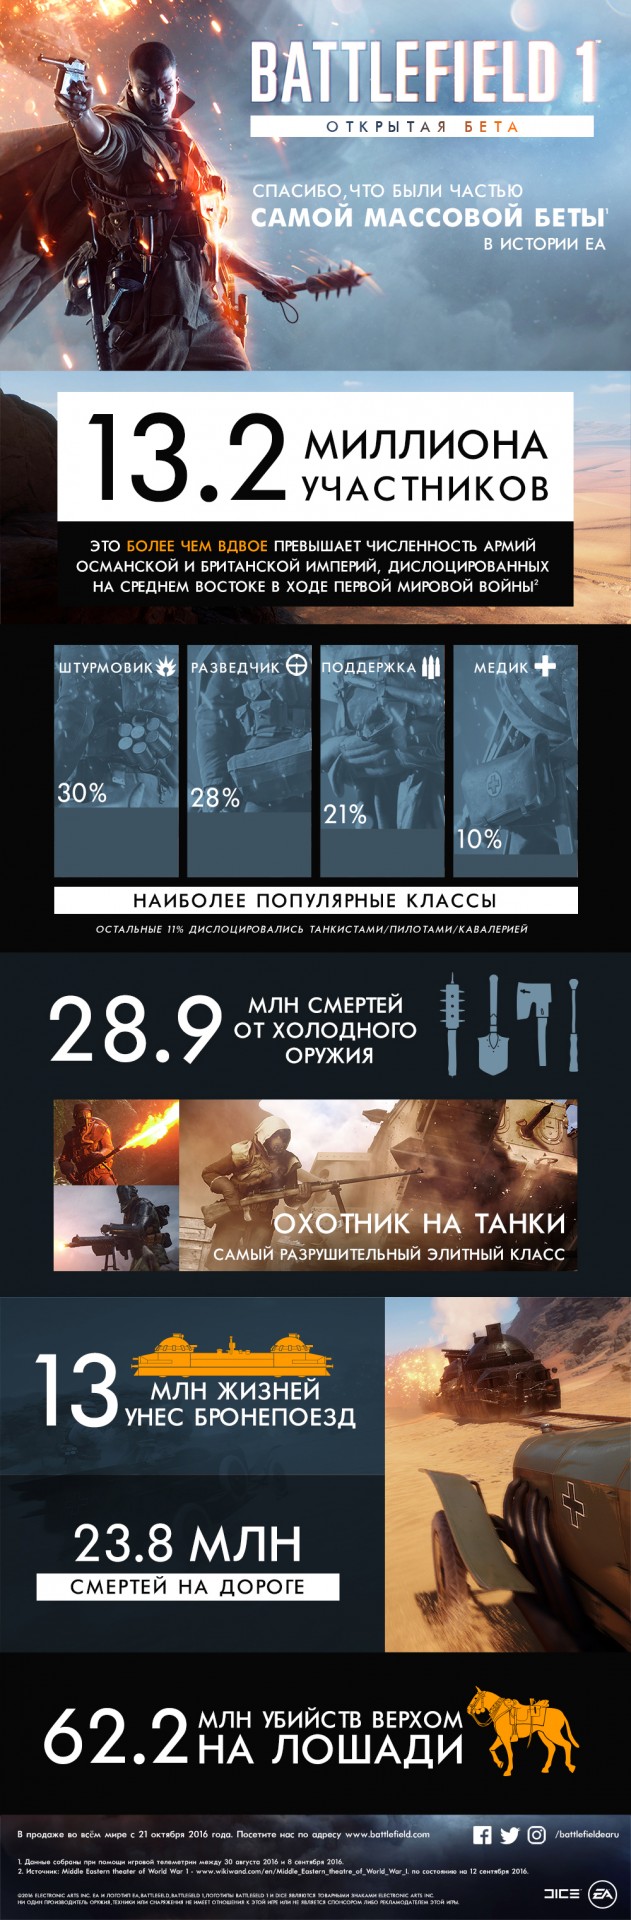 Battlefield 1 - Открытый бета-тест Battlefield 1 был очень успешным - screenshot 1